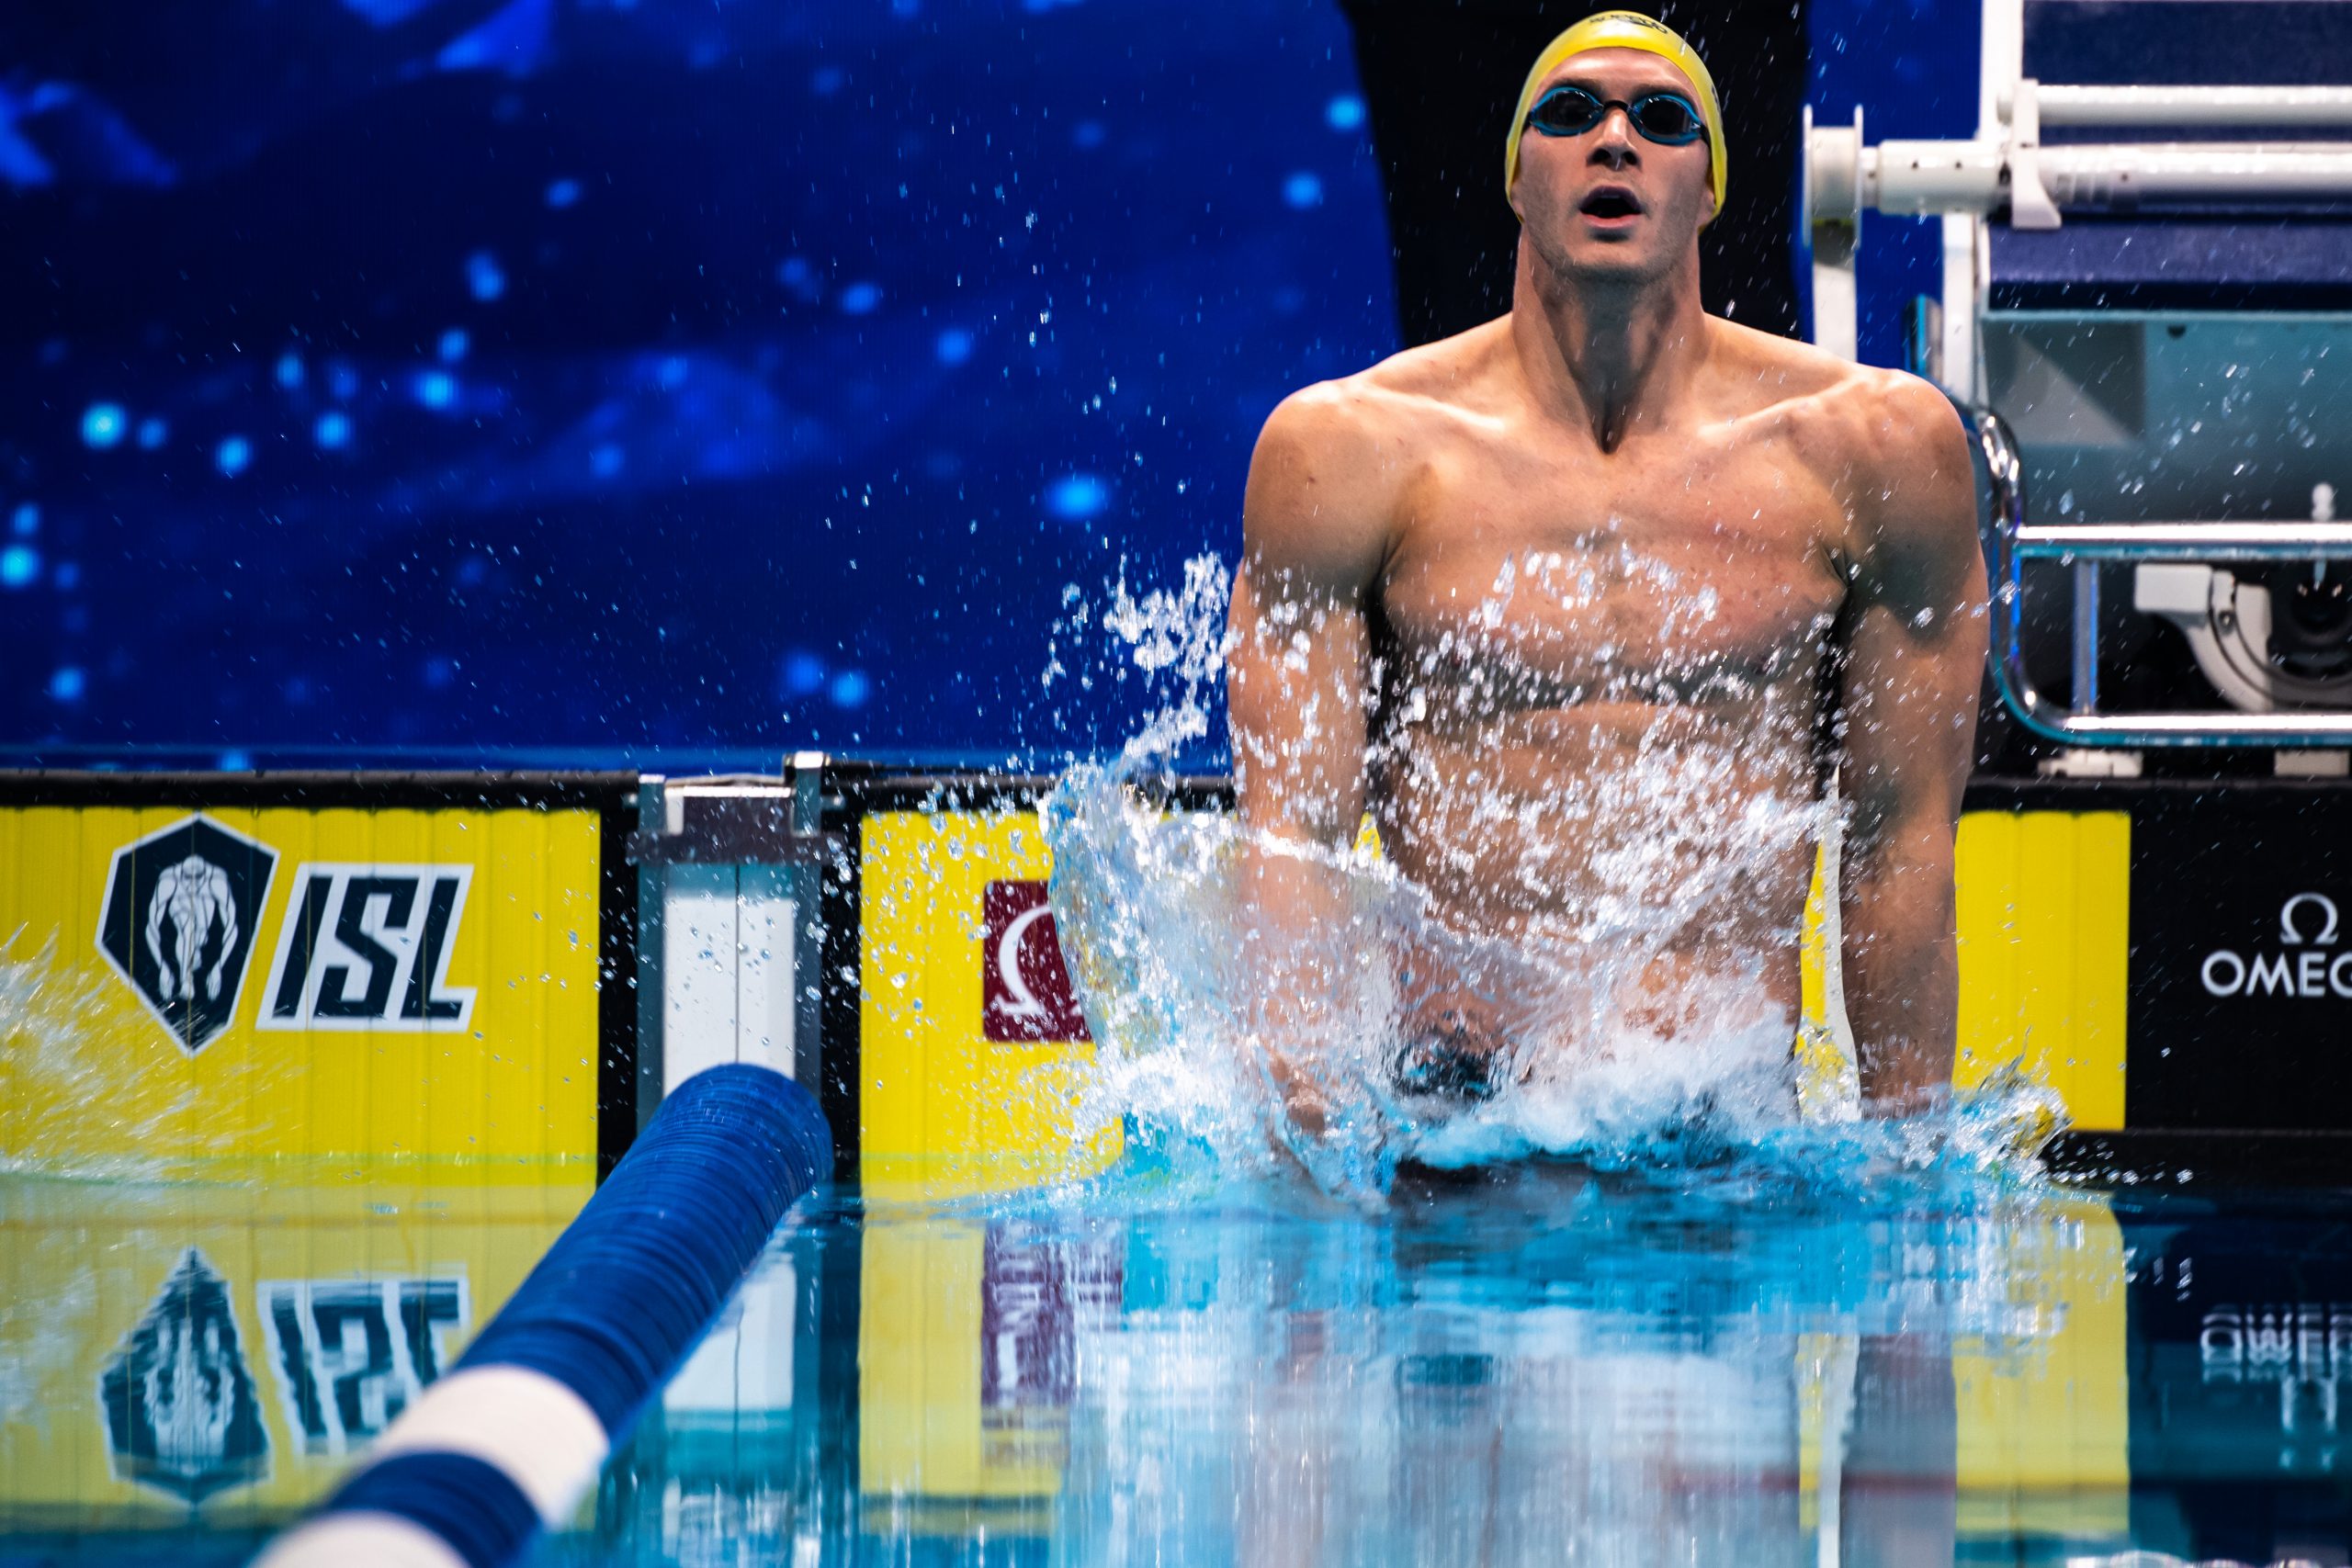 Ryan Murphy, in the zone, swimming, olympics